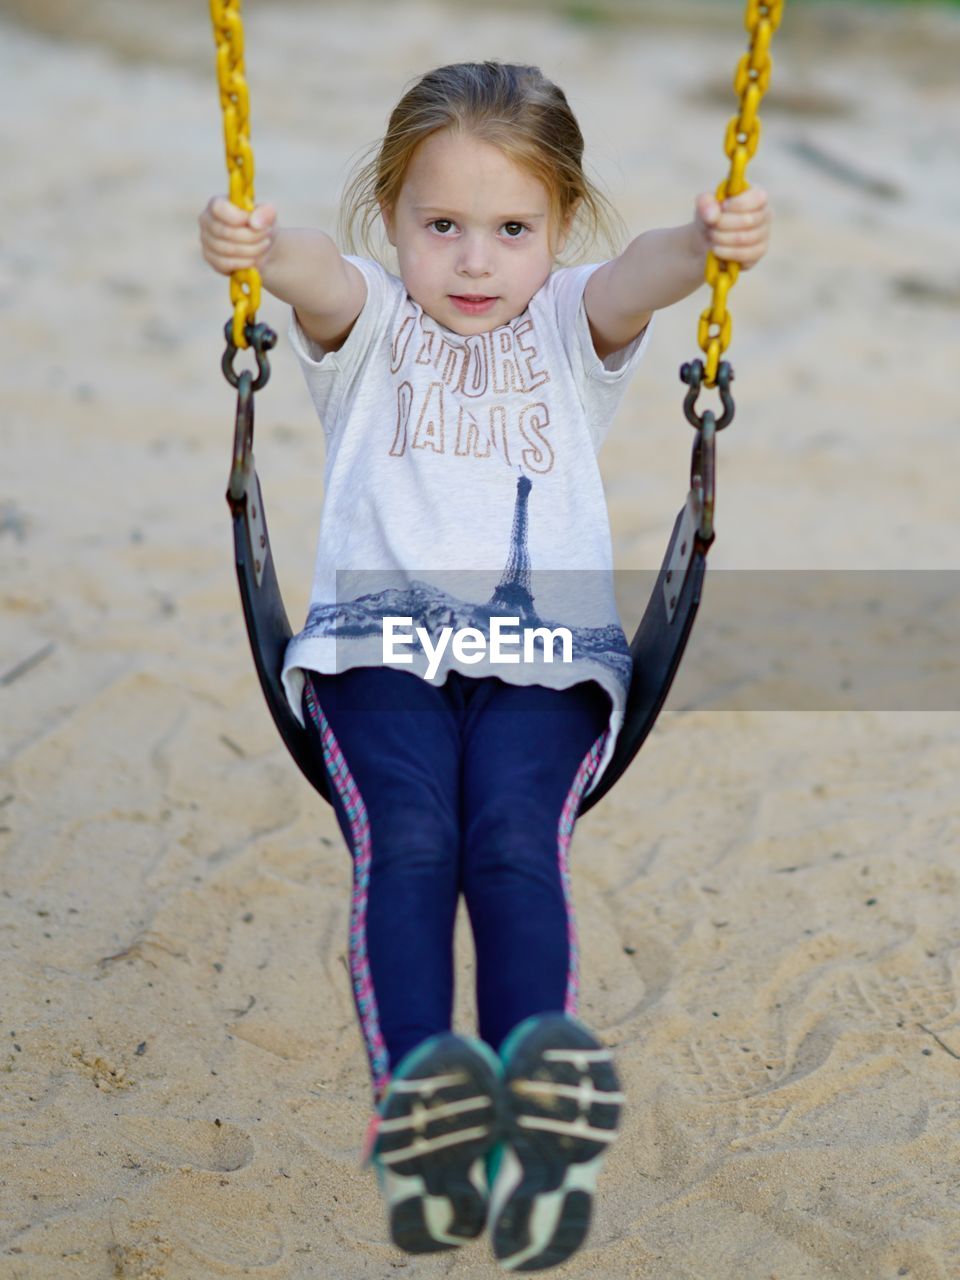 Girl swinging over sand in park